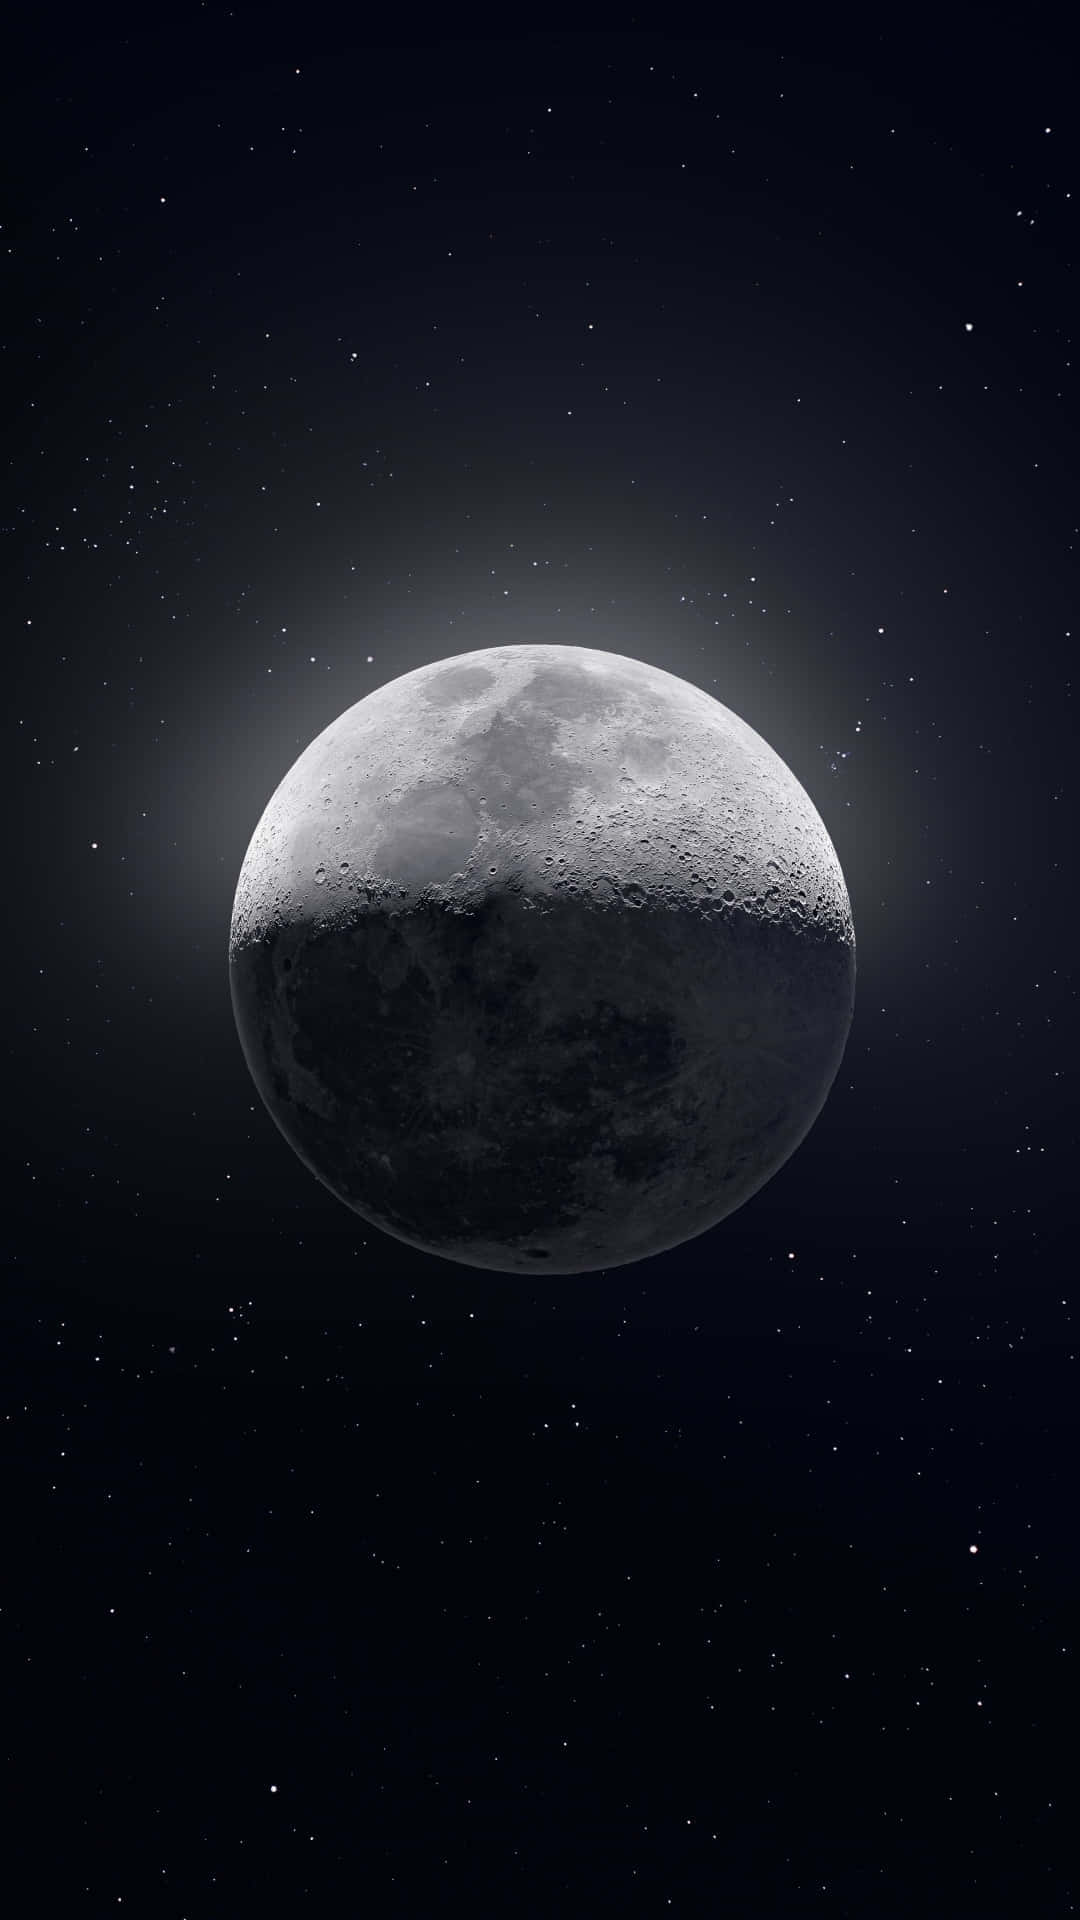 Fang månen i aften med Måne Iphone Wallpaper